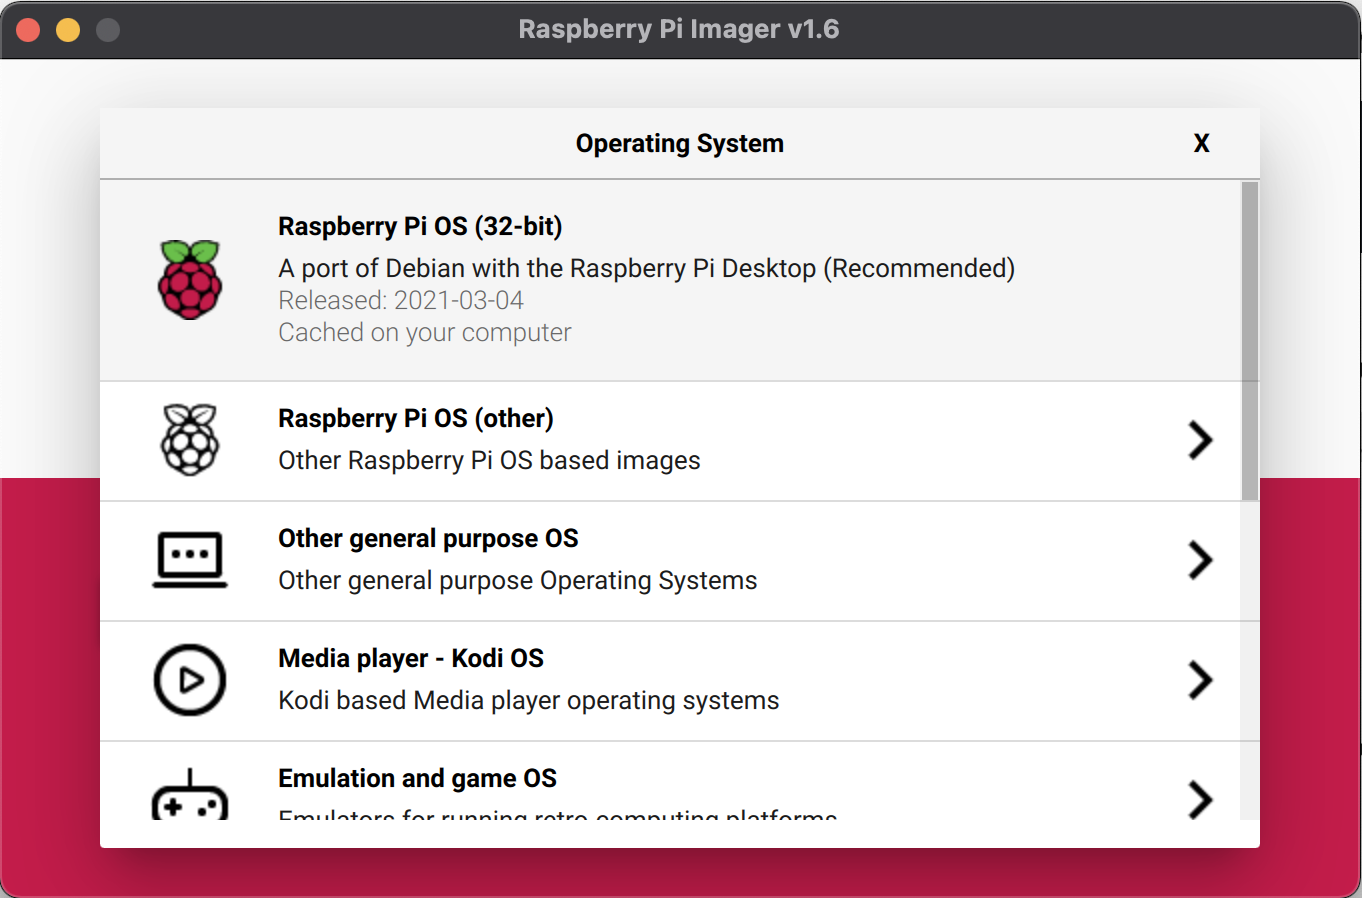 Raspberry Pi Imager tool